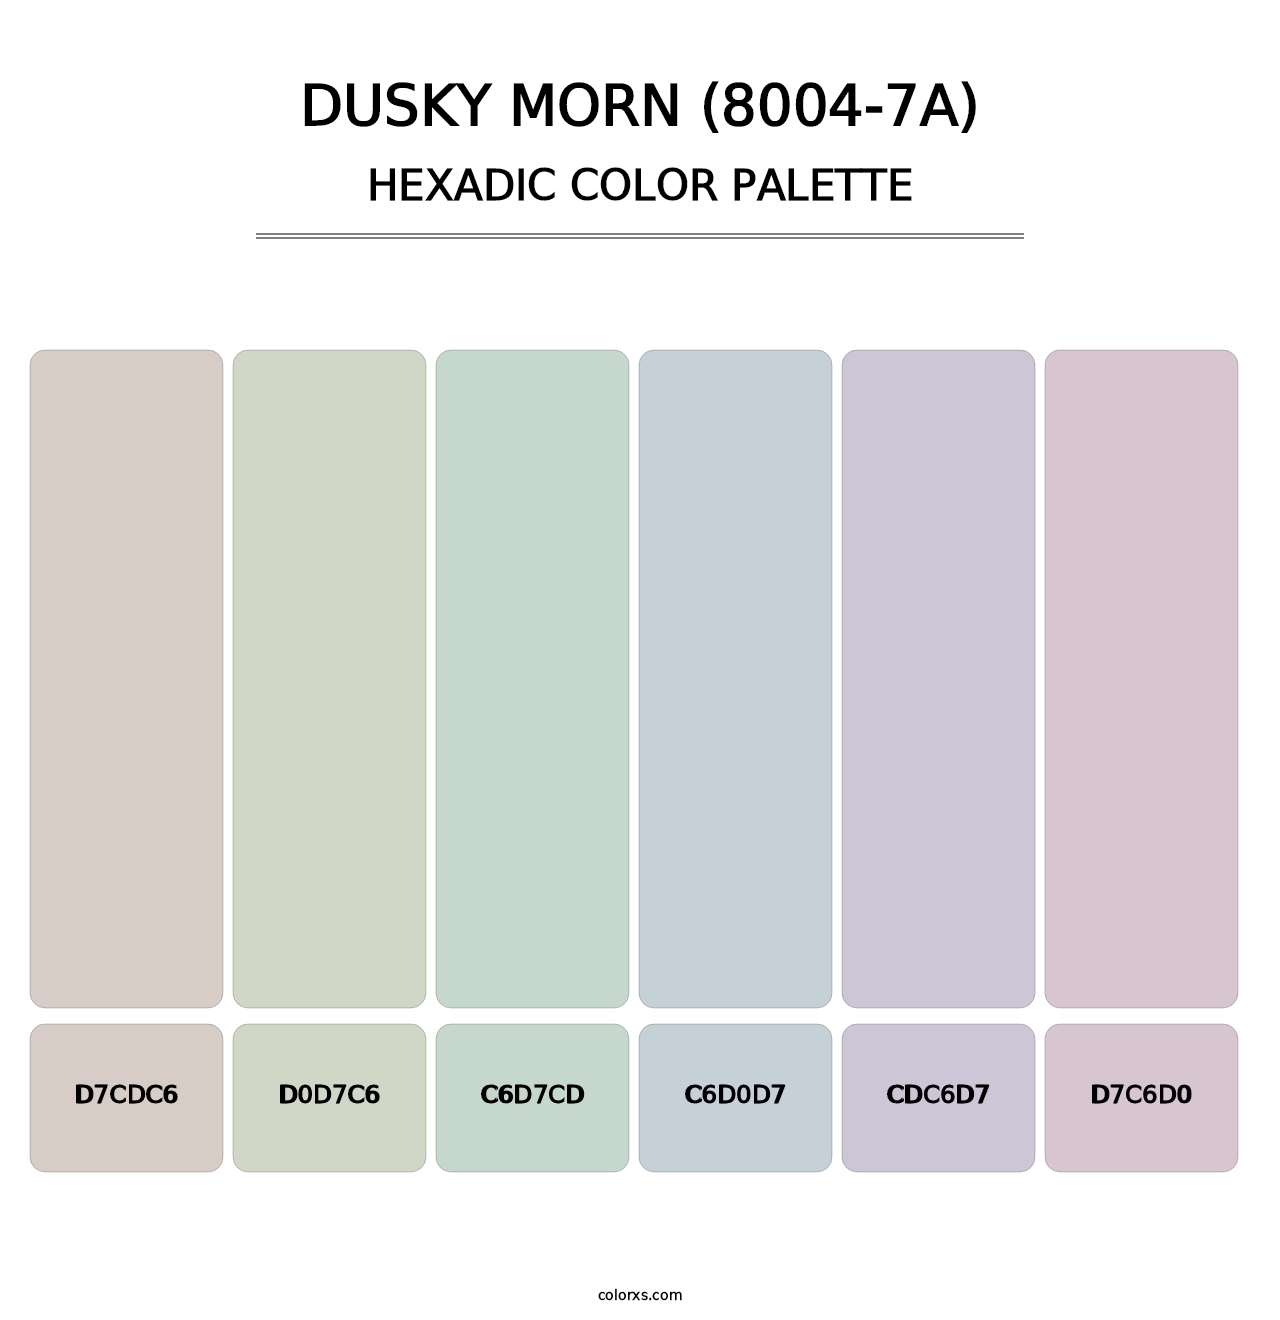 Dusky Morn (8004-7A) - Hexadic Color Palette